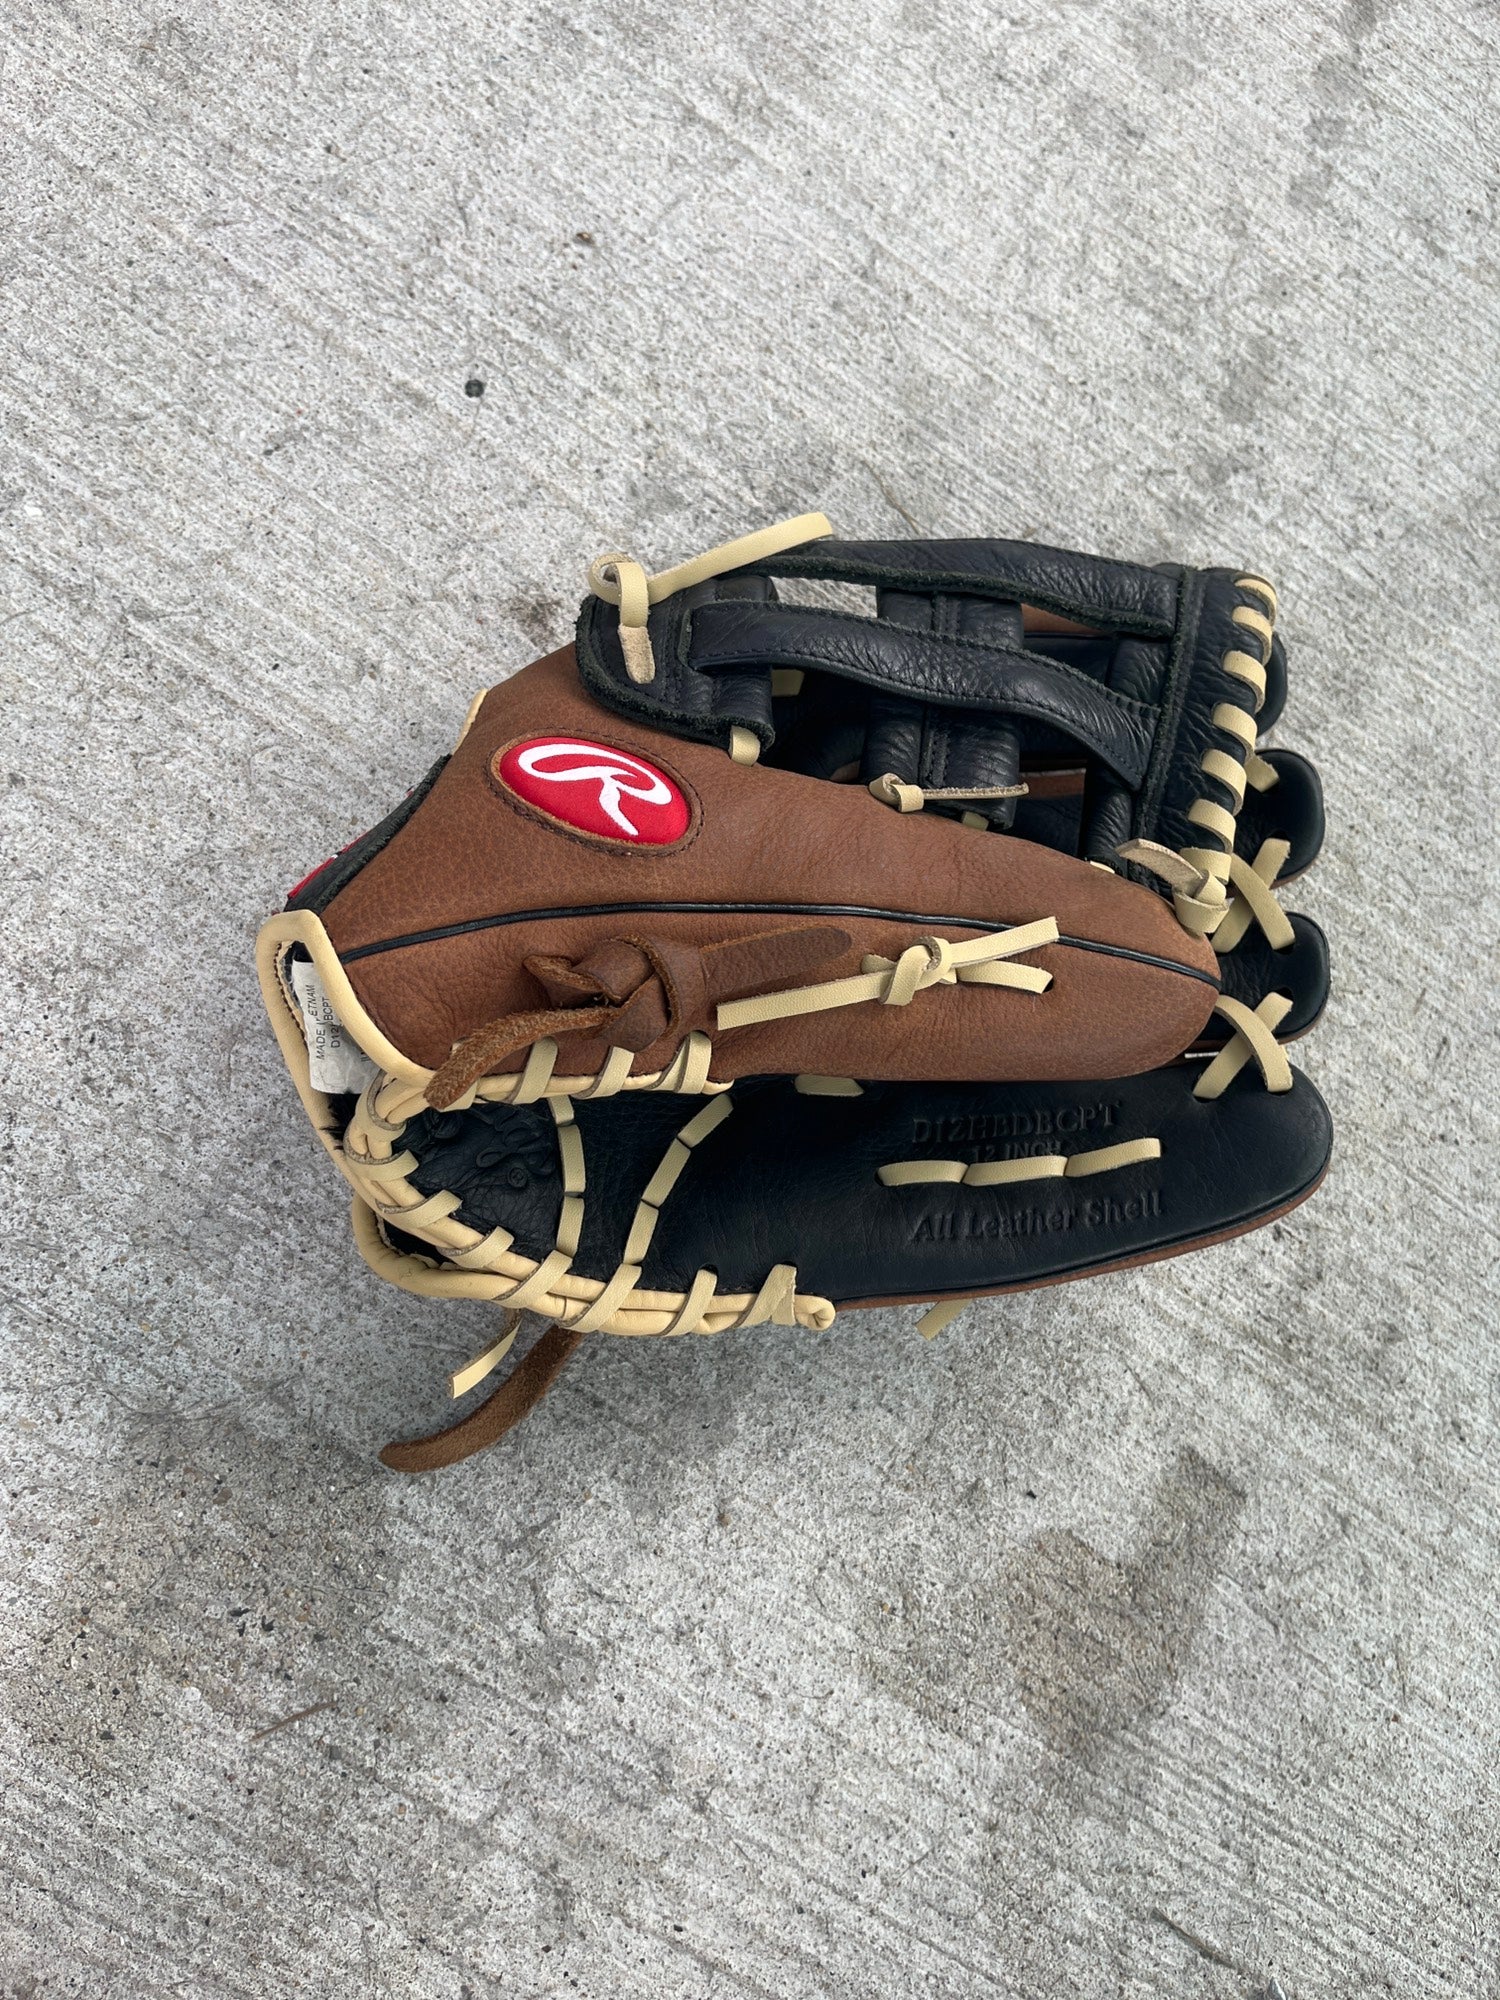 2020 Christian Yelich Model 12.75 Heart of the Hide Baseball Glove